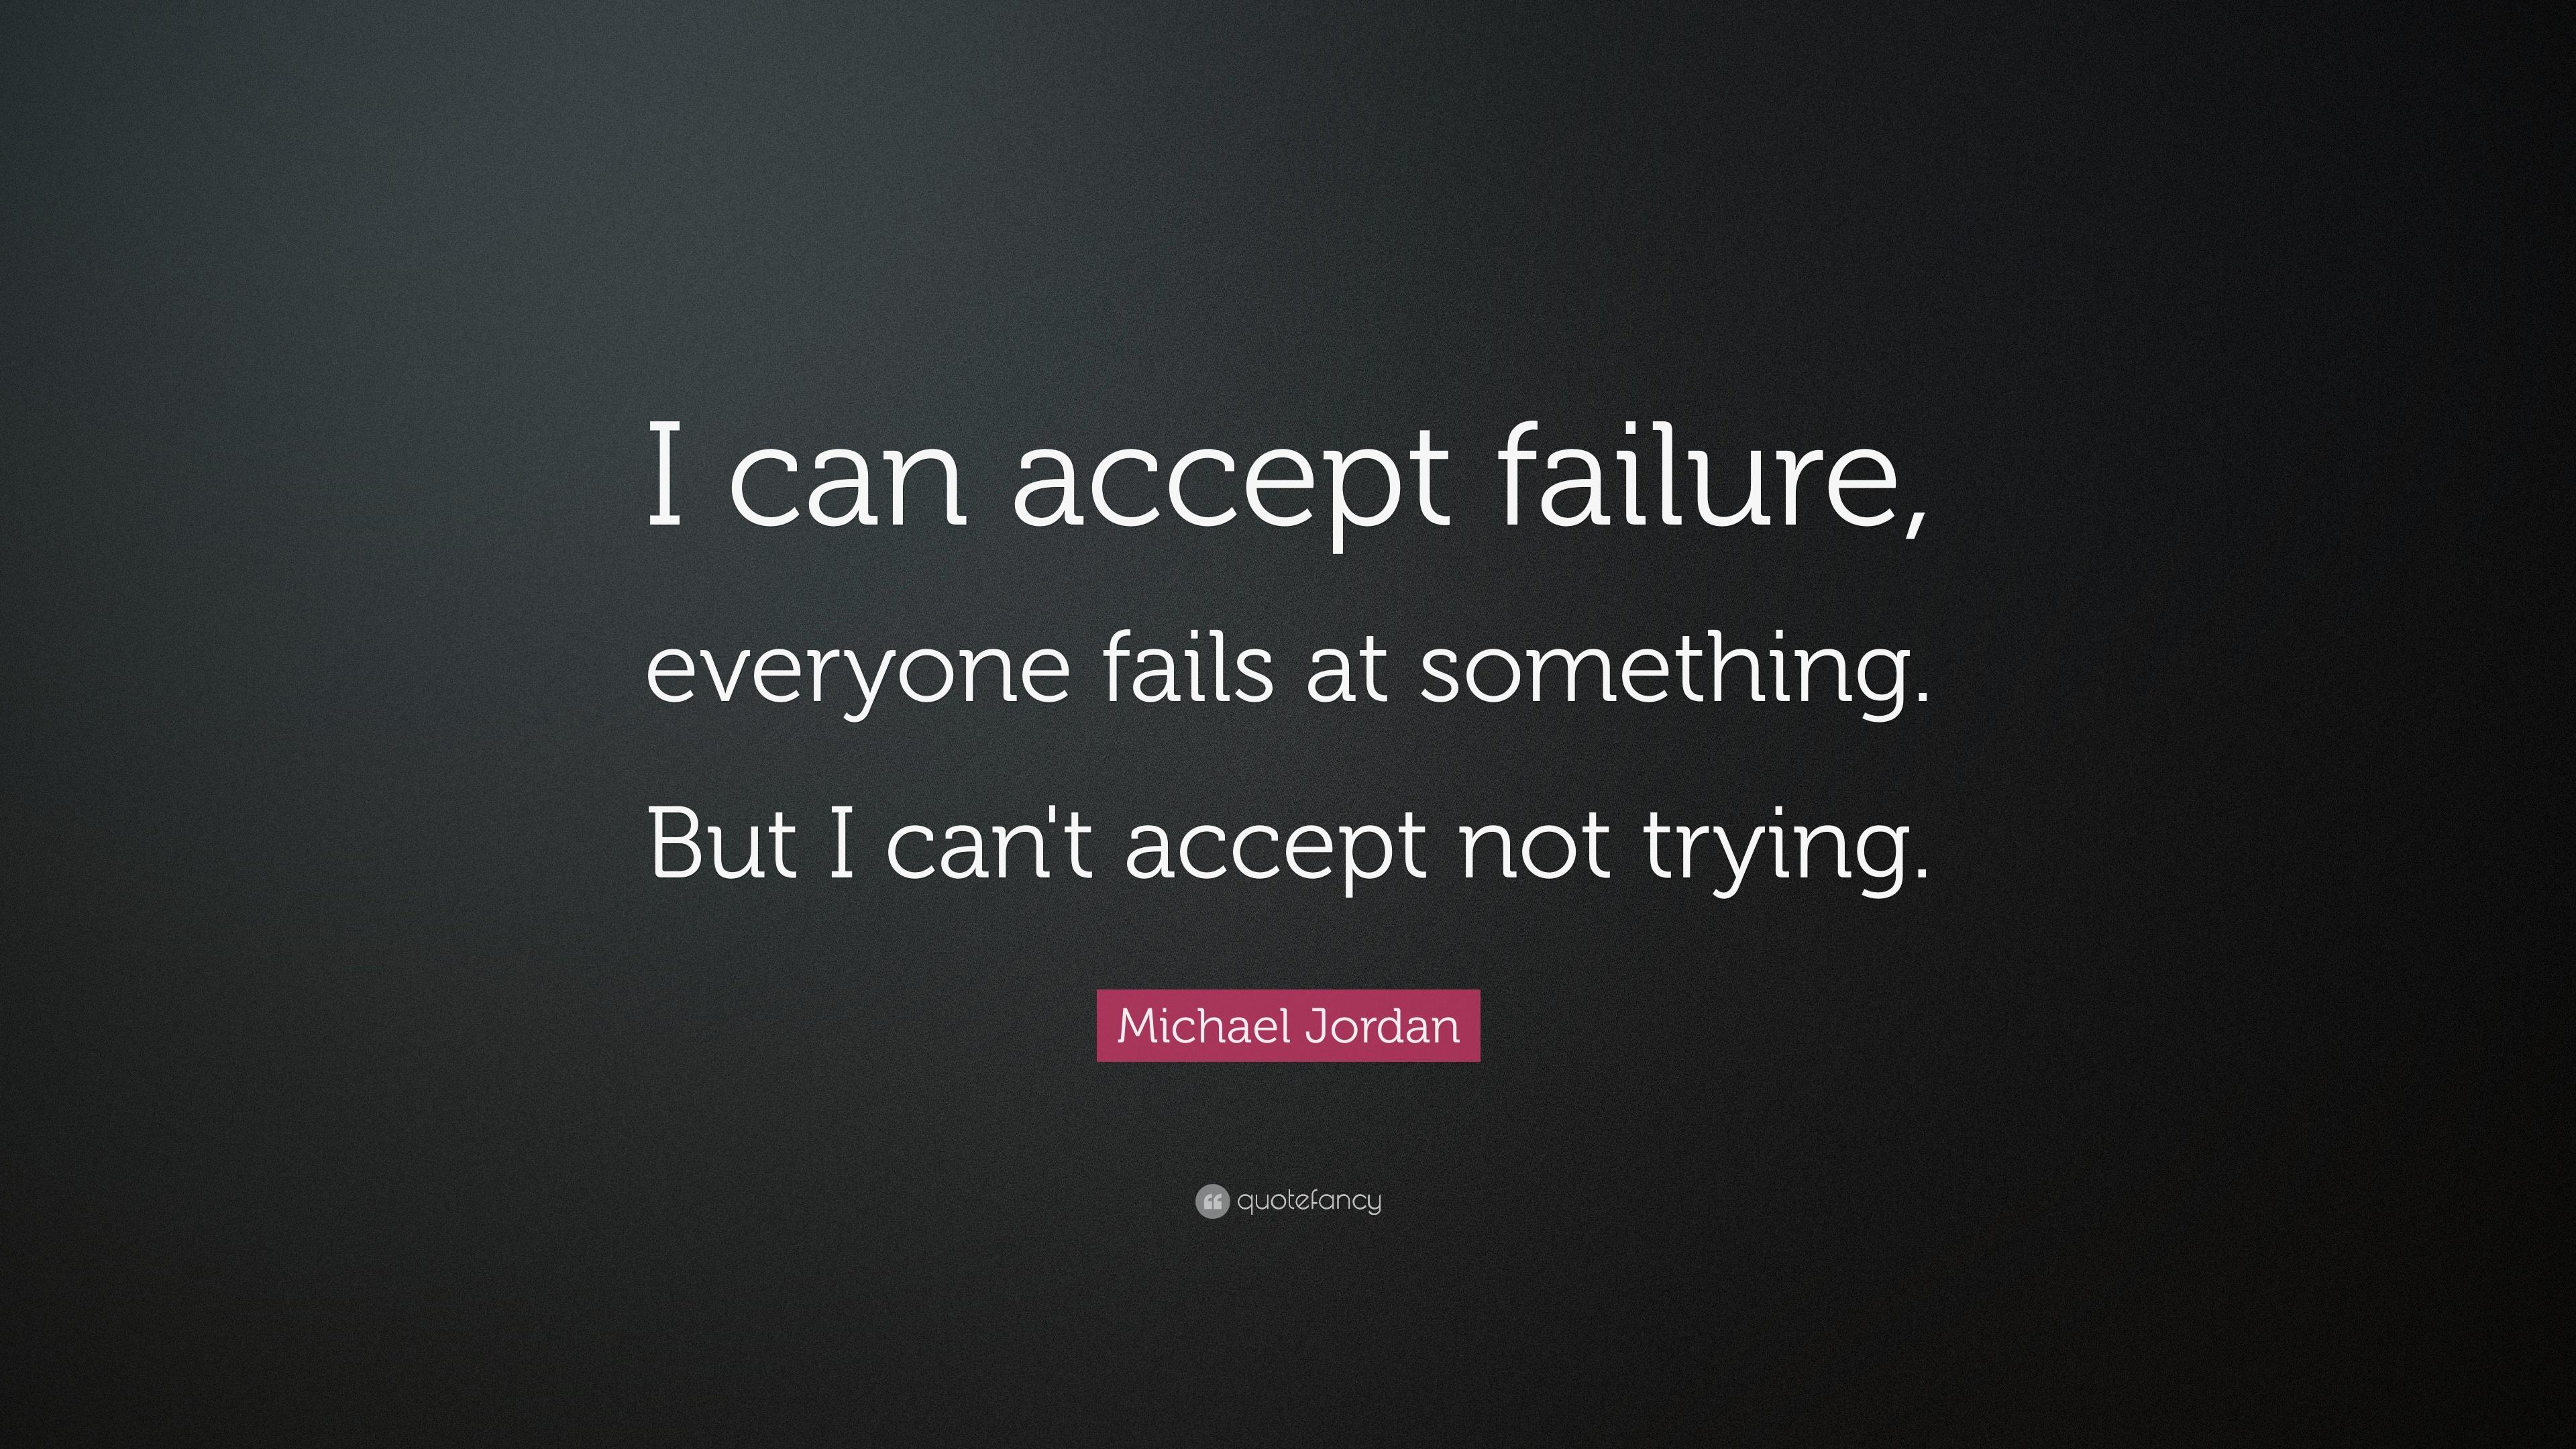 Michael Jordan Quote: “I can accept failure, everyone fails